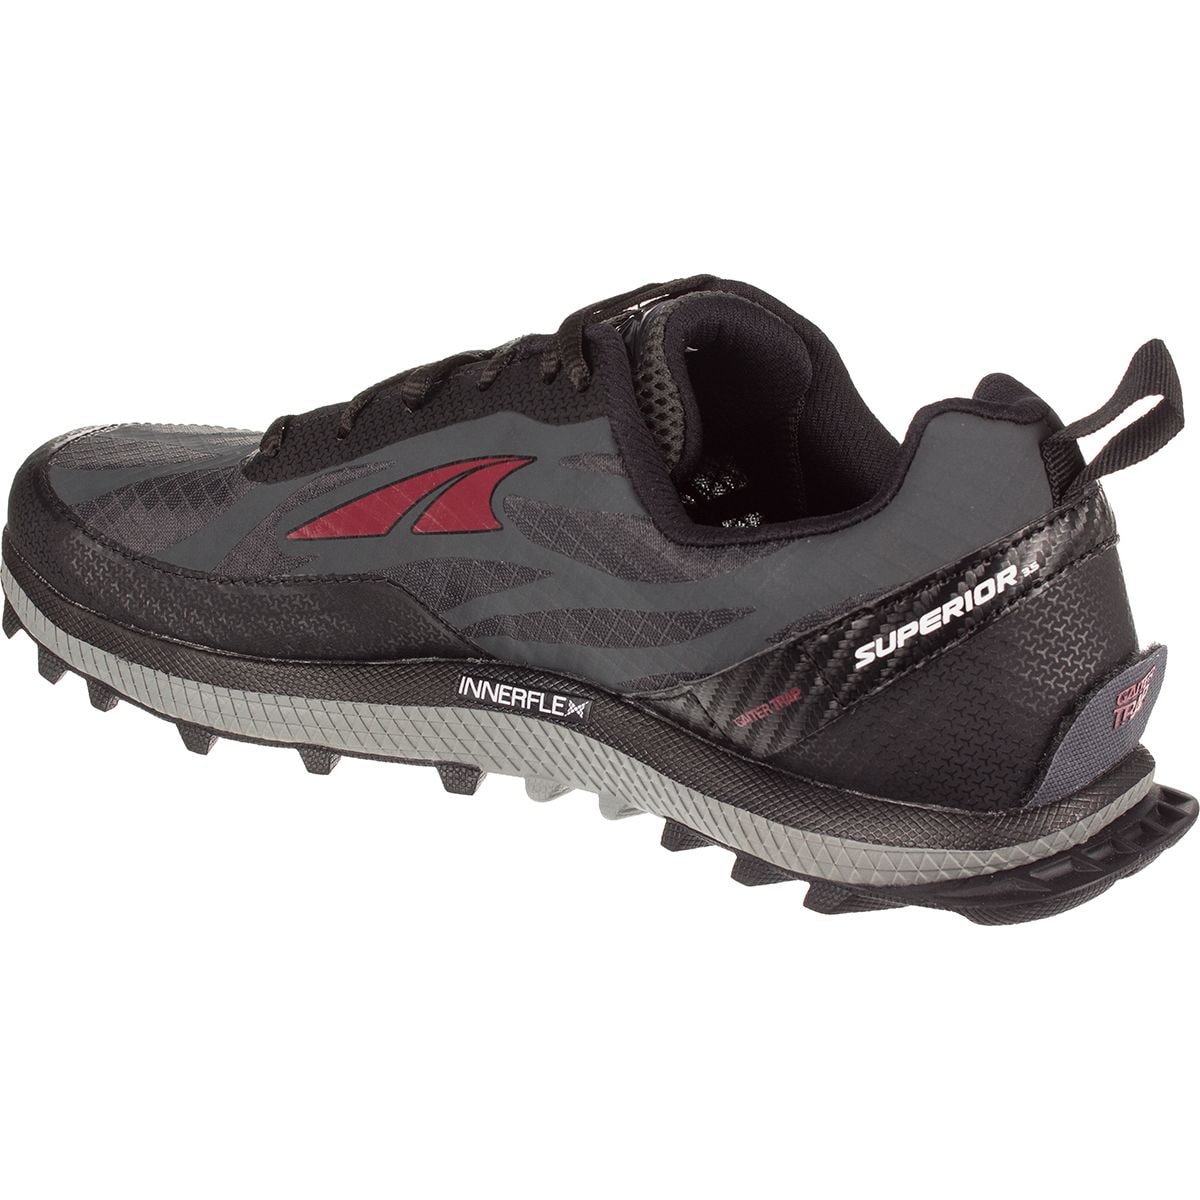 Altra Superior 3.5 Trail Running Shoe - Men's - Footwear